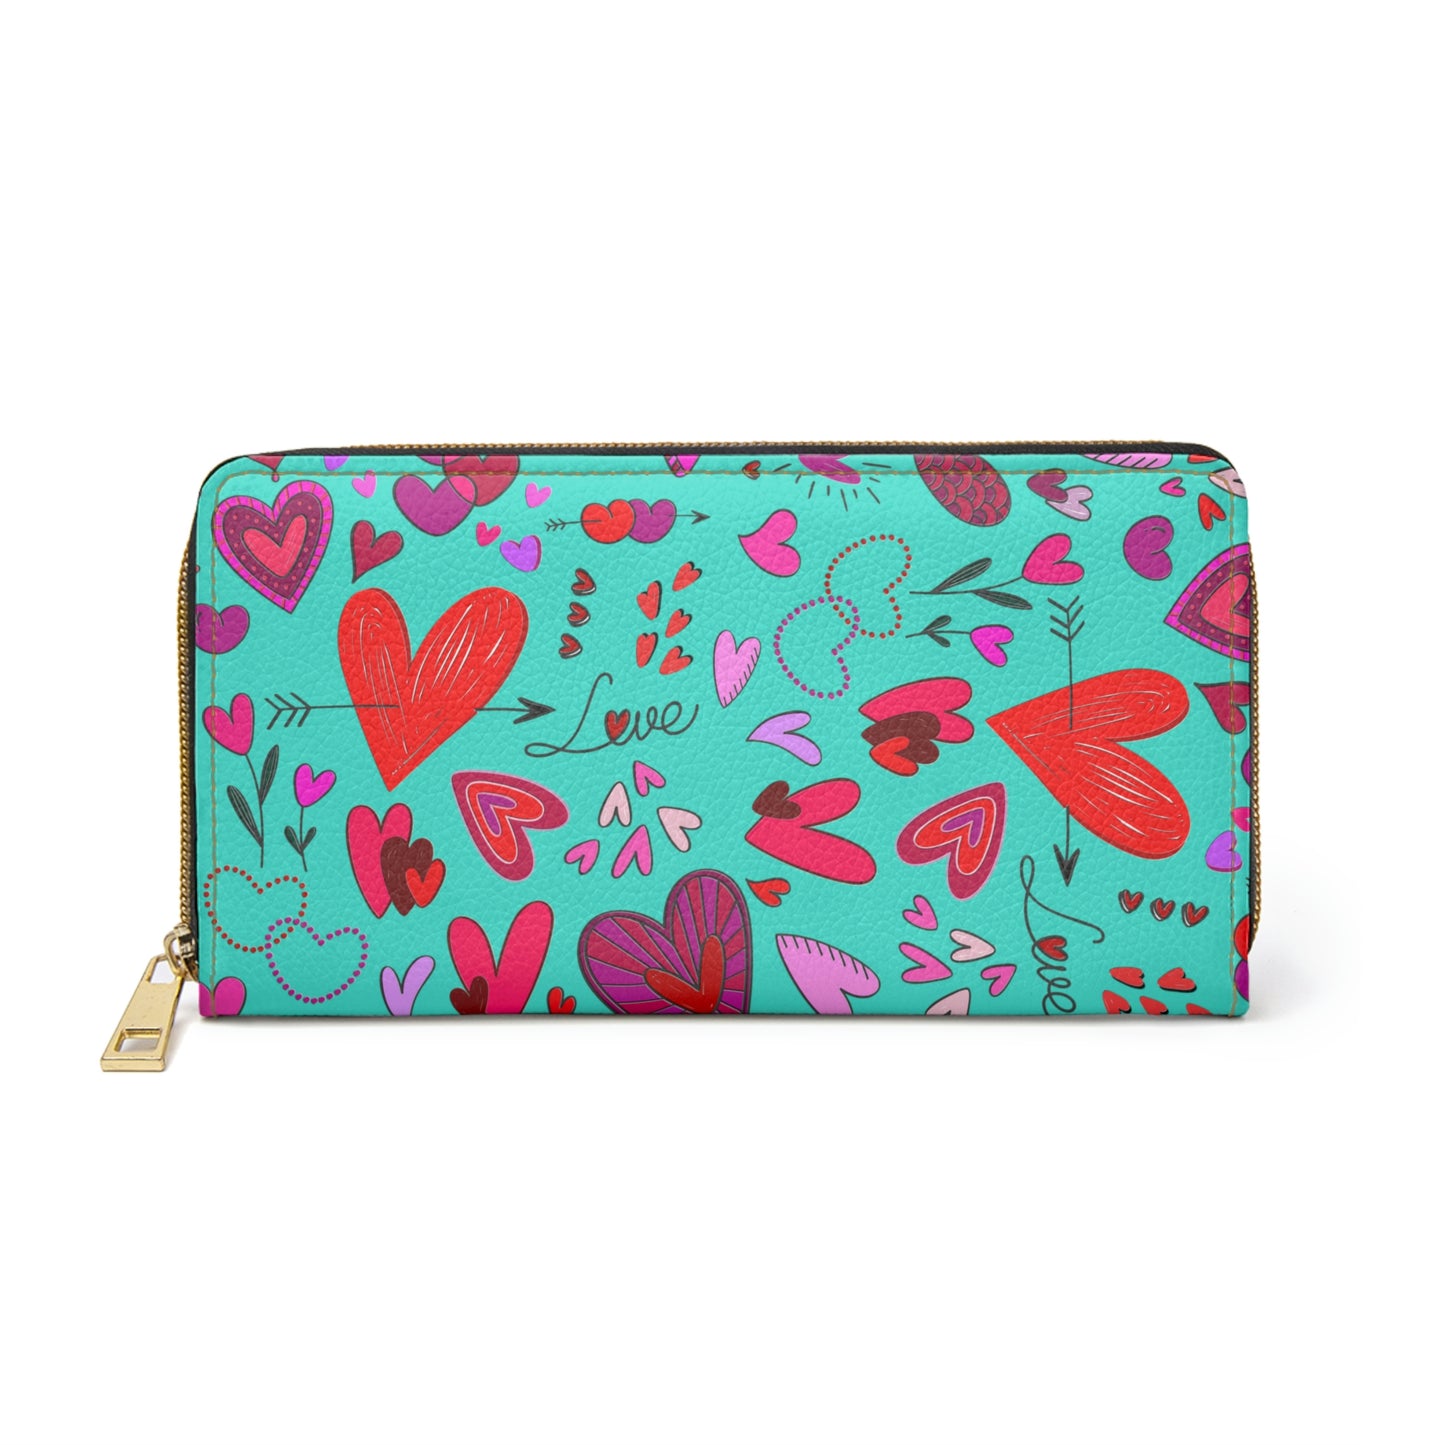 Heart Doodles - Turquoise 40e0d0 - Zipper Wallet